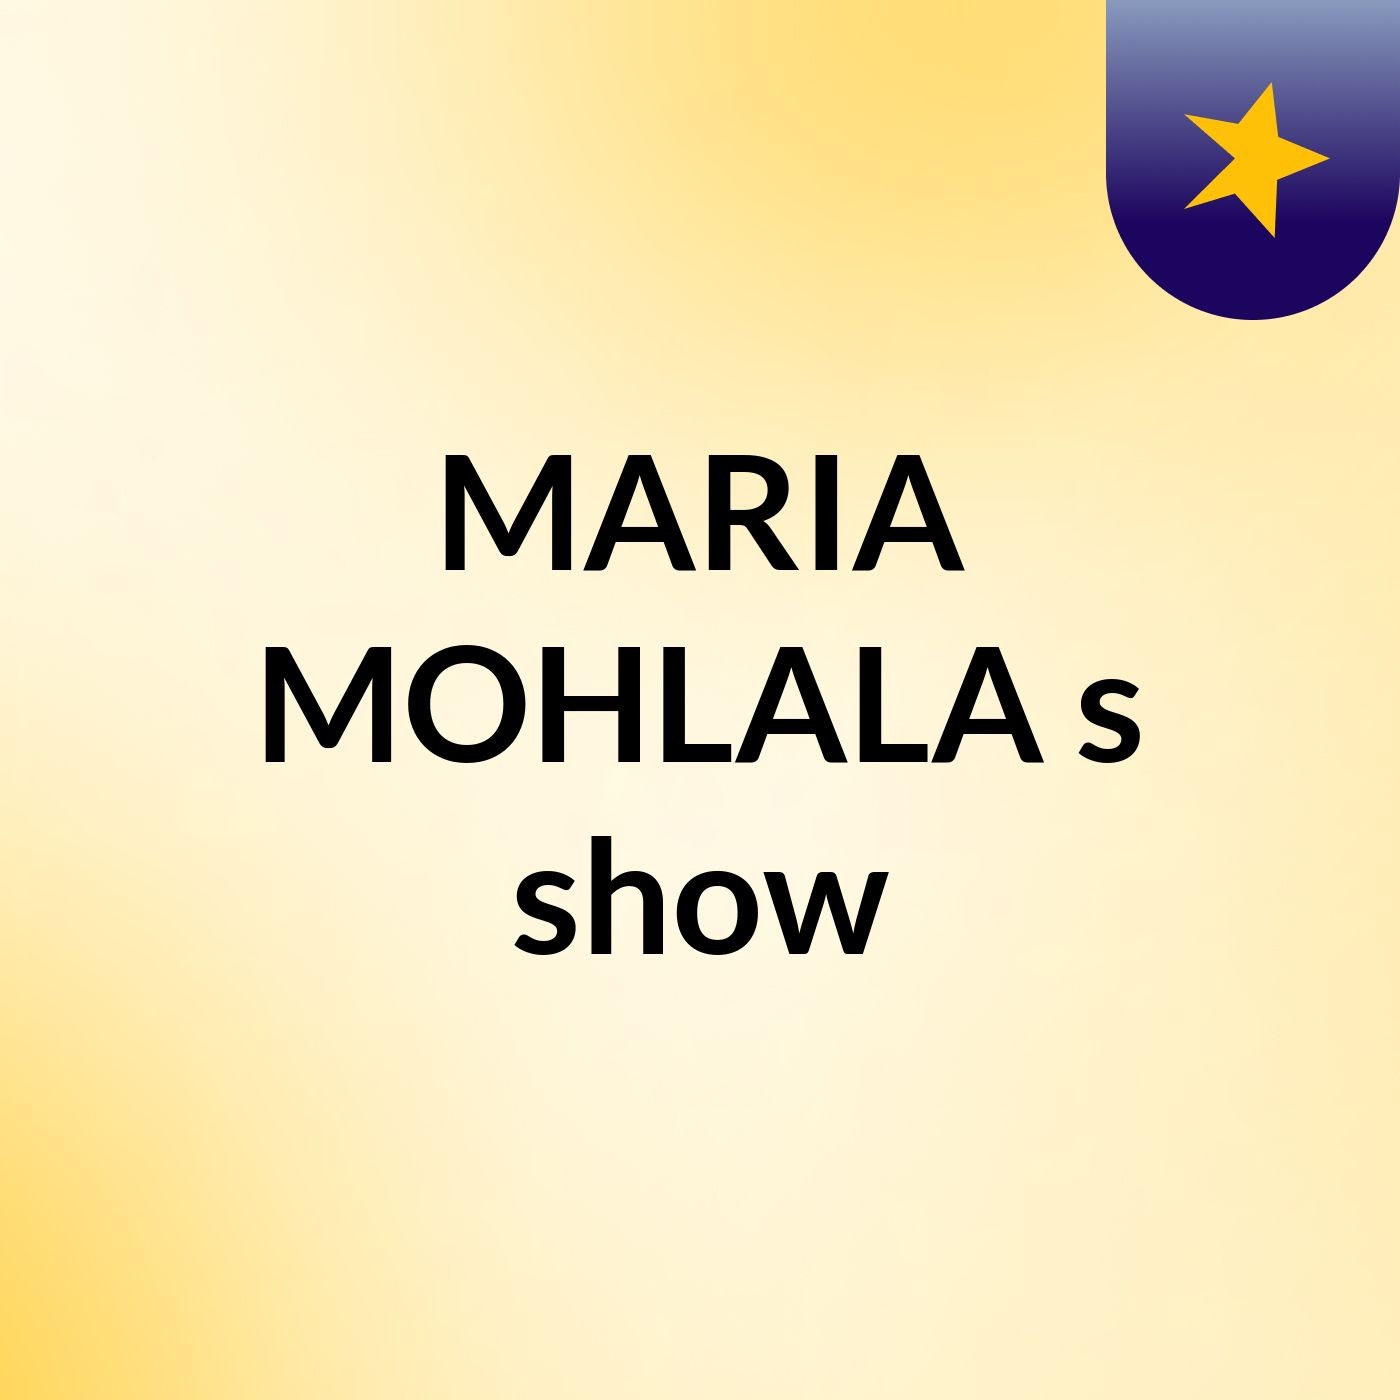 MARIA MOHLALA's show